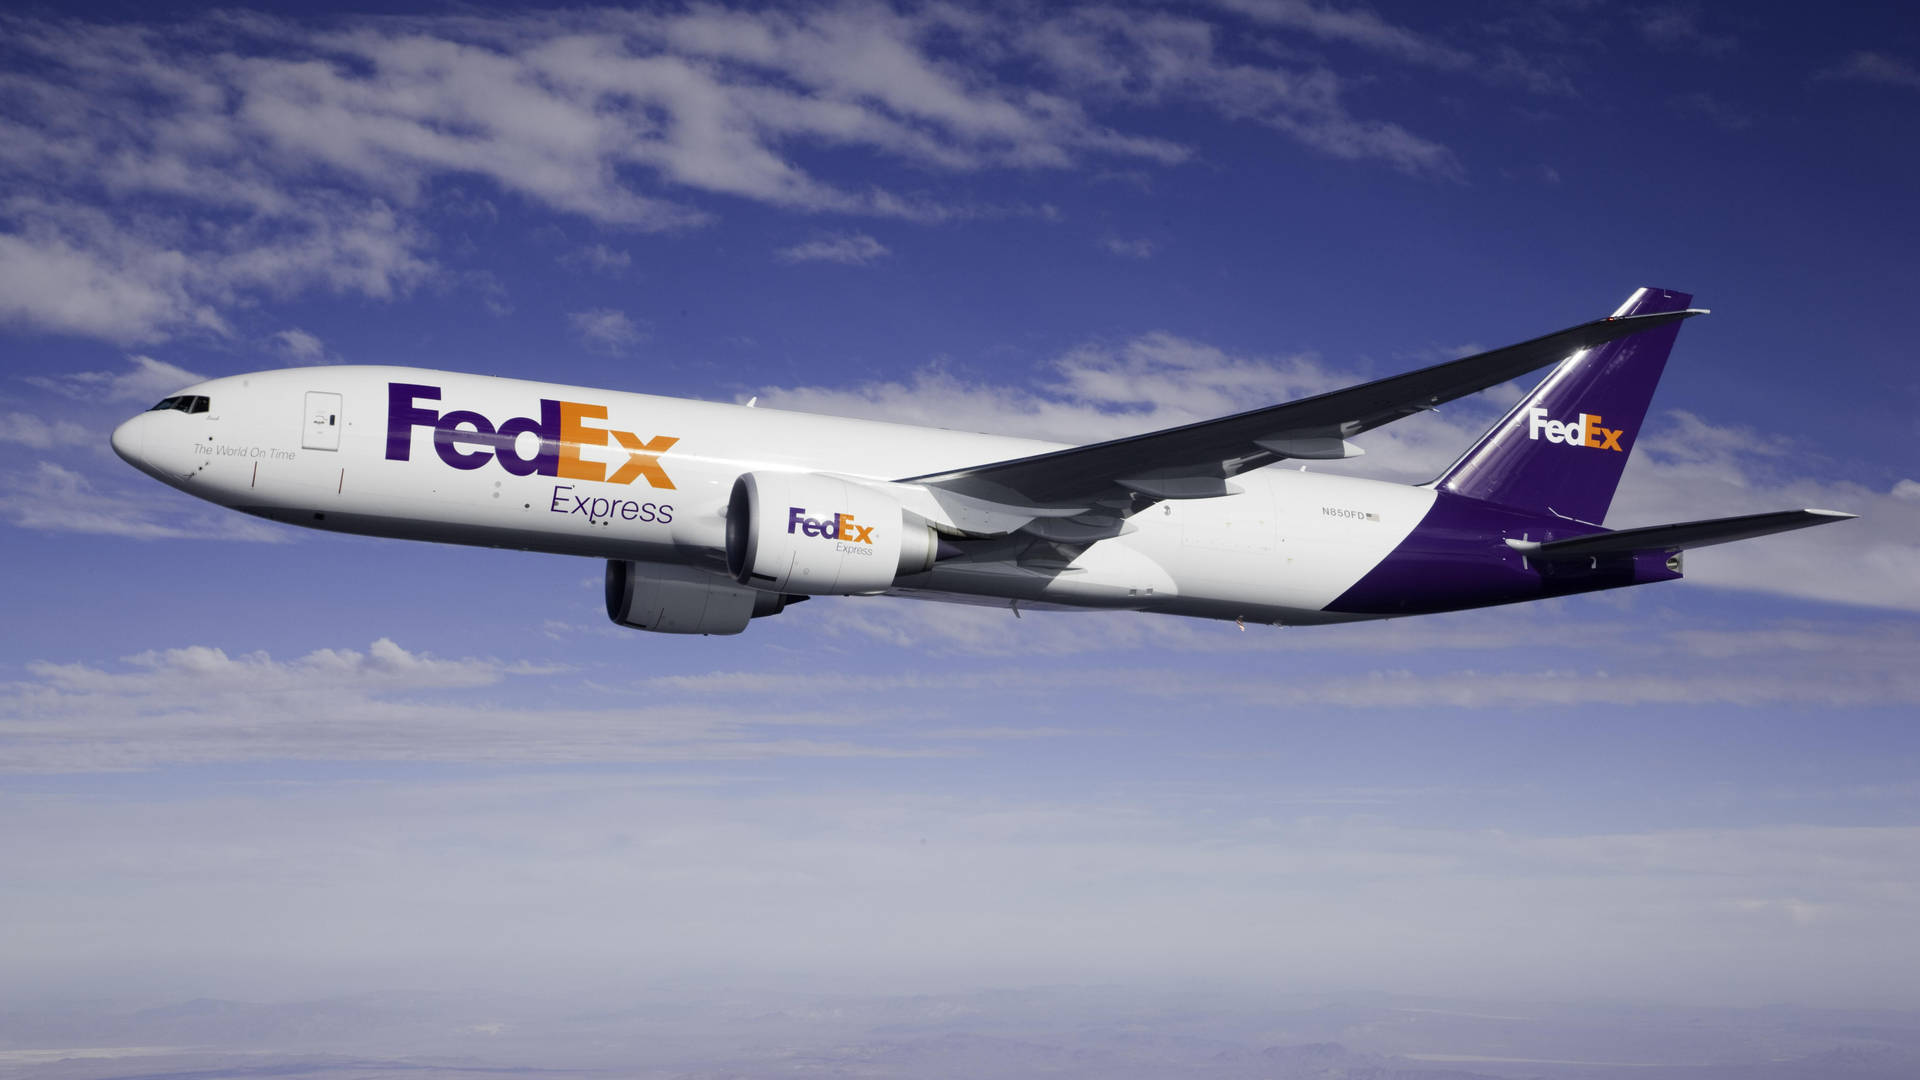 Fedex Air Courier Service Background